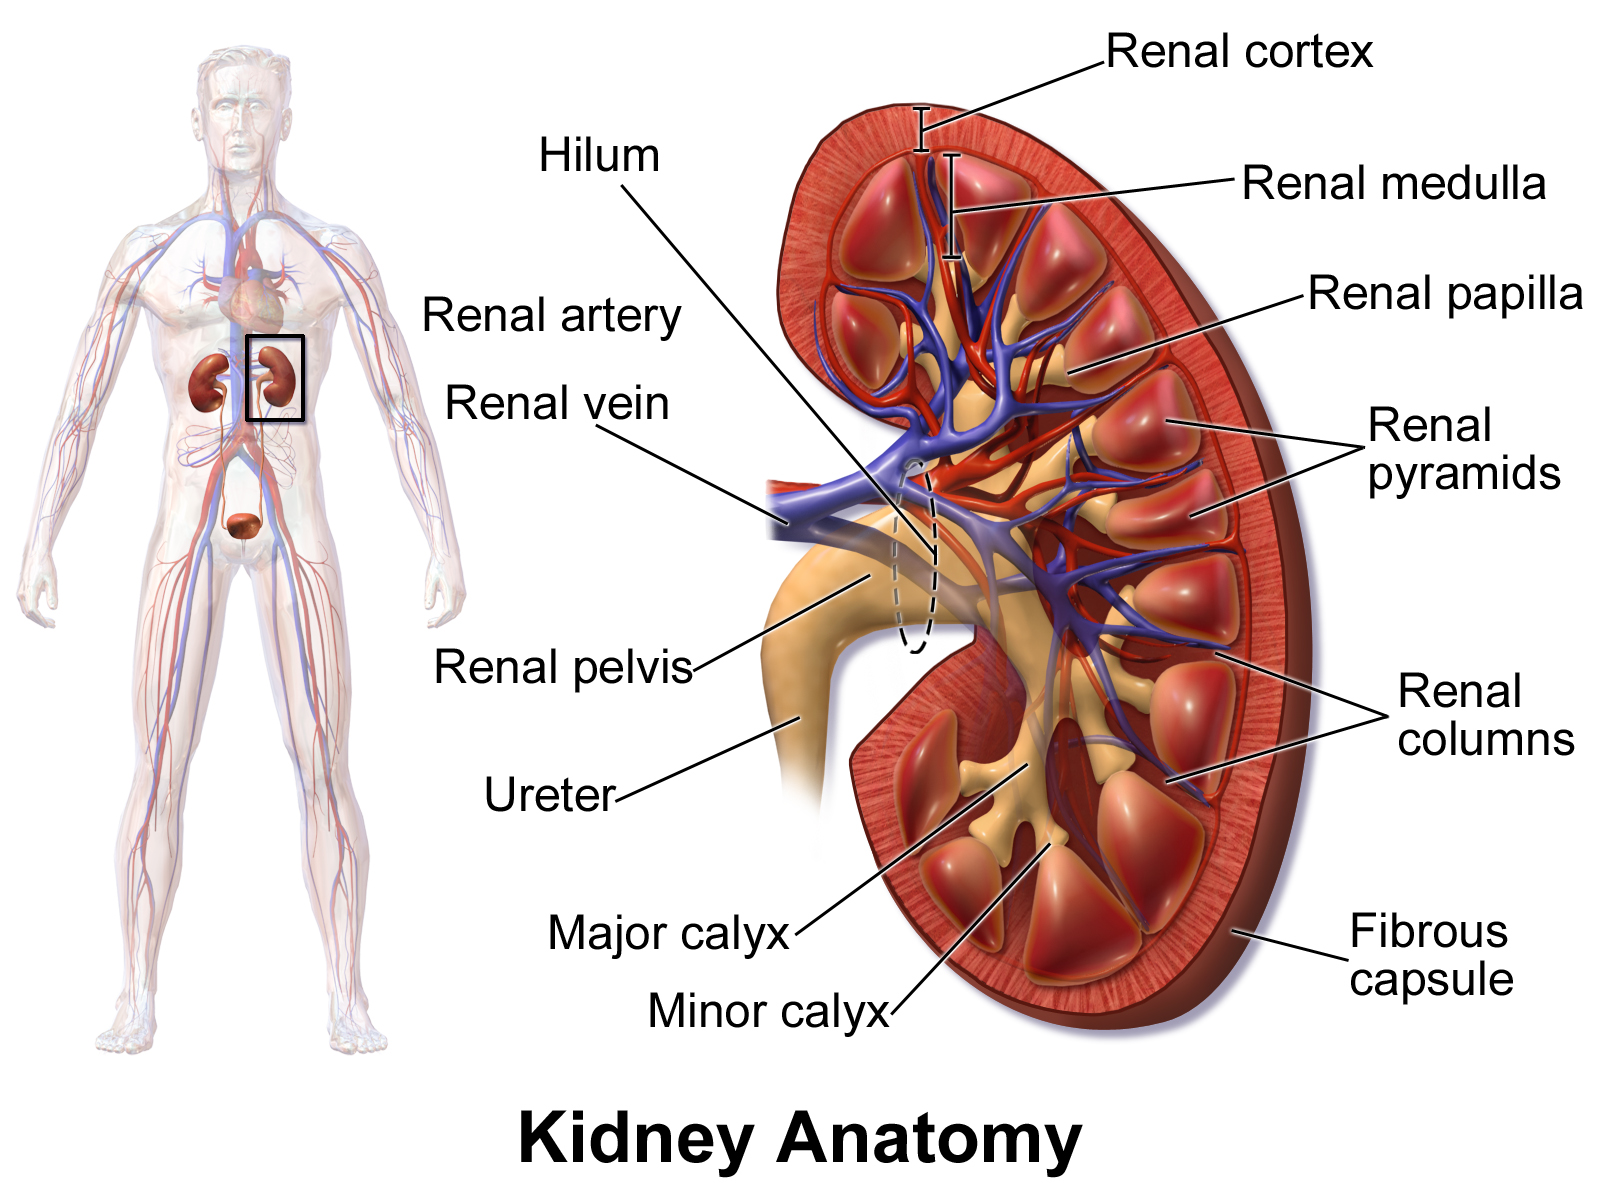 Kidney Anatomy - Wikipedia